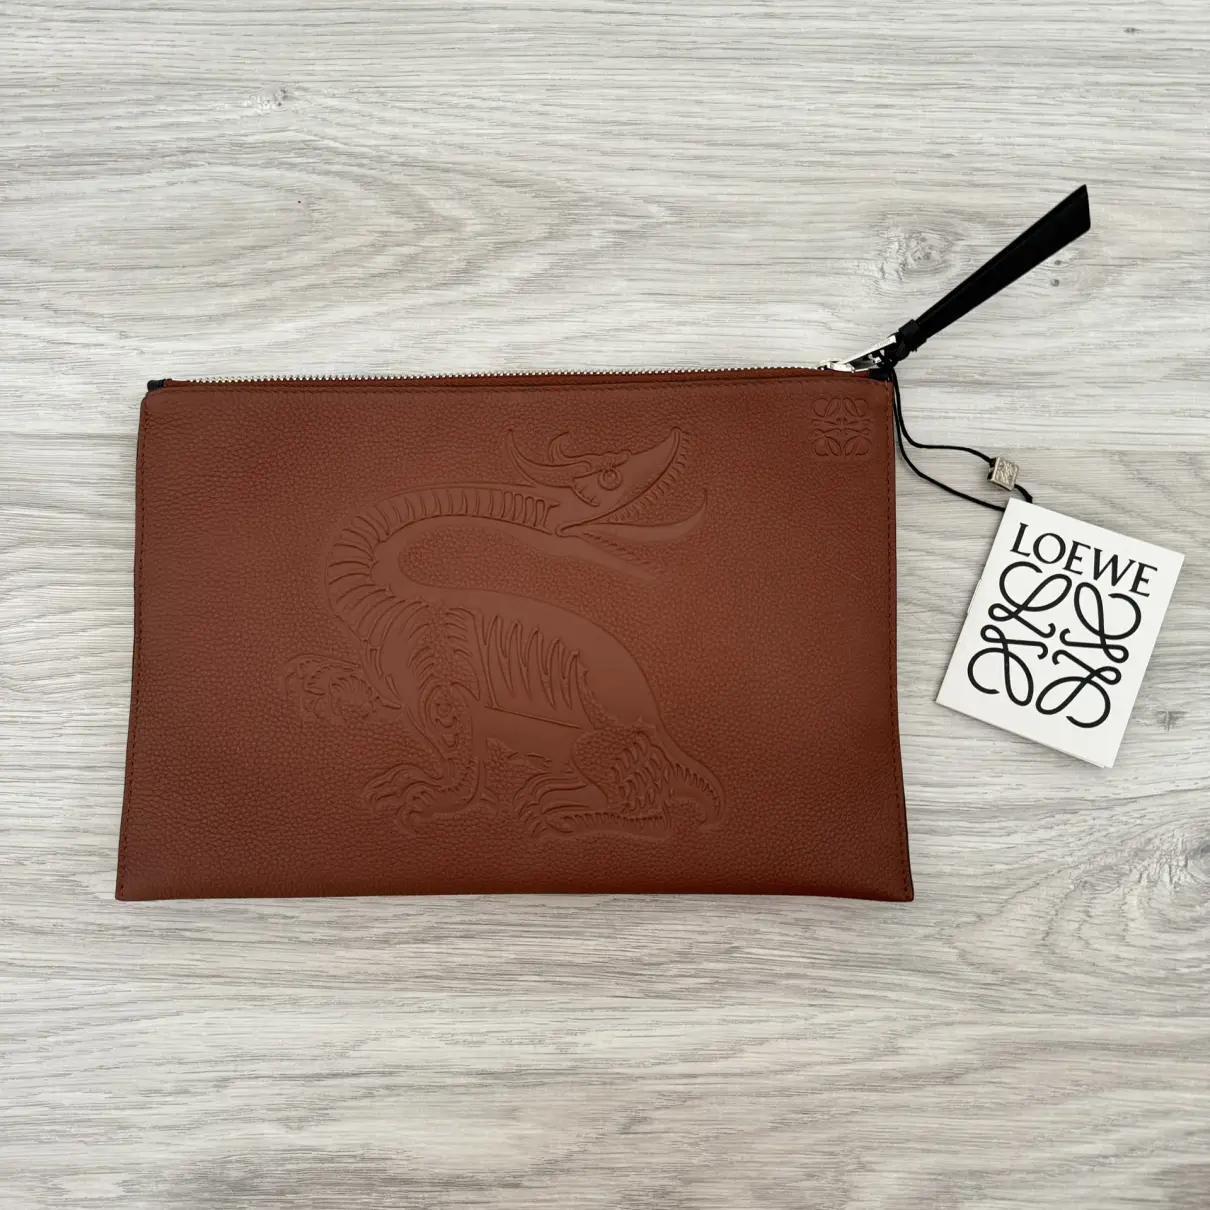 Buy Loewe Puzzle leather satchel online